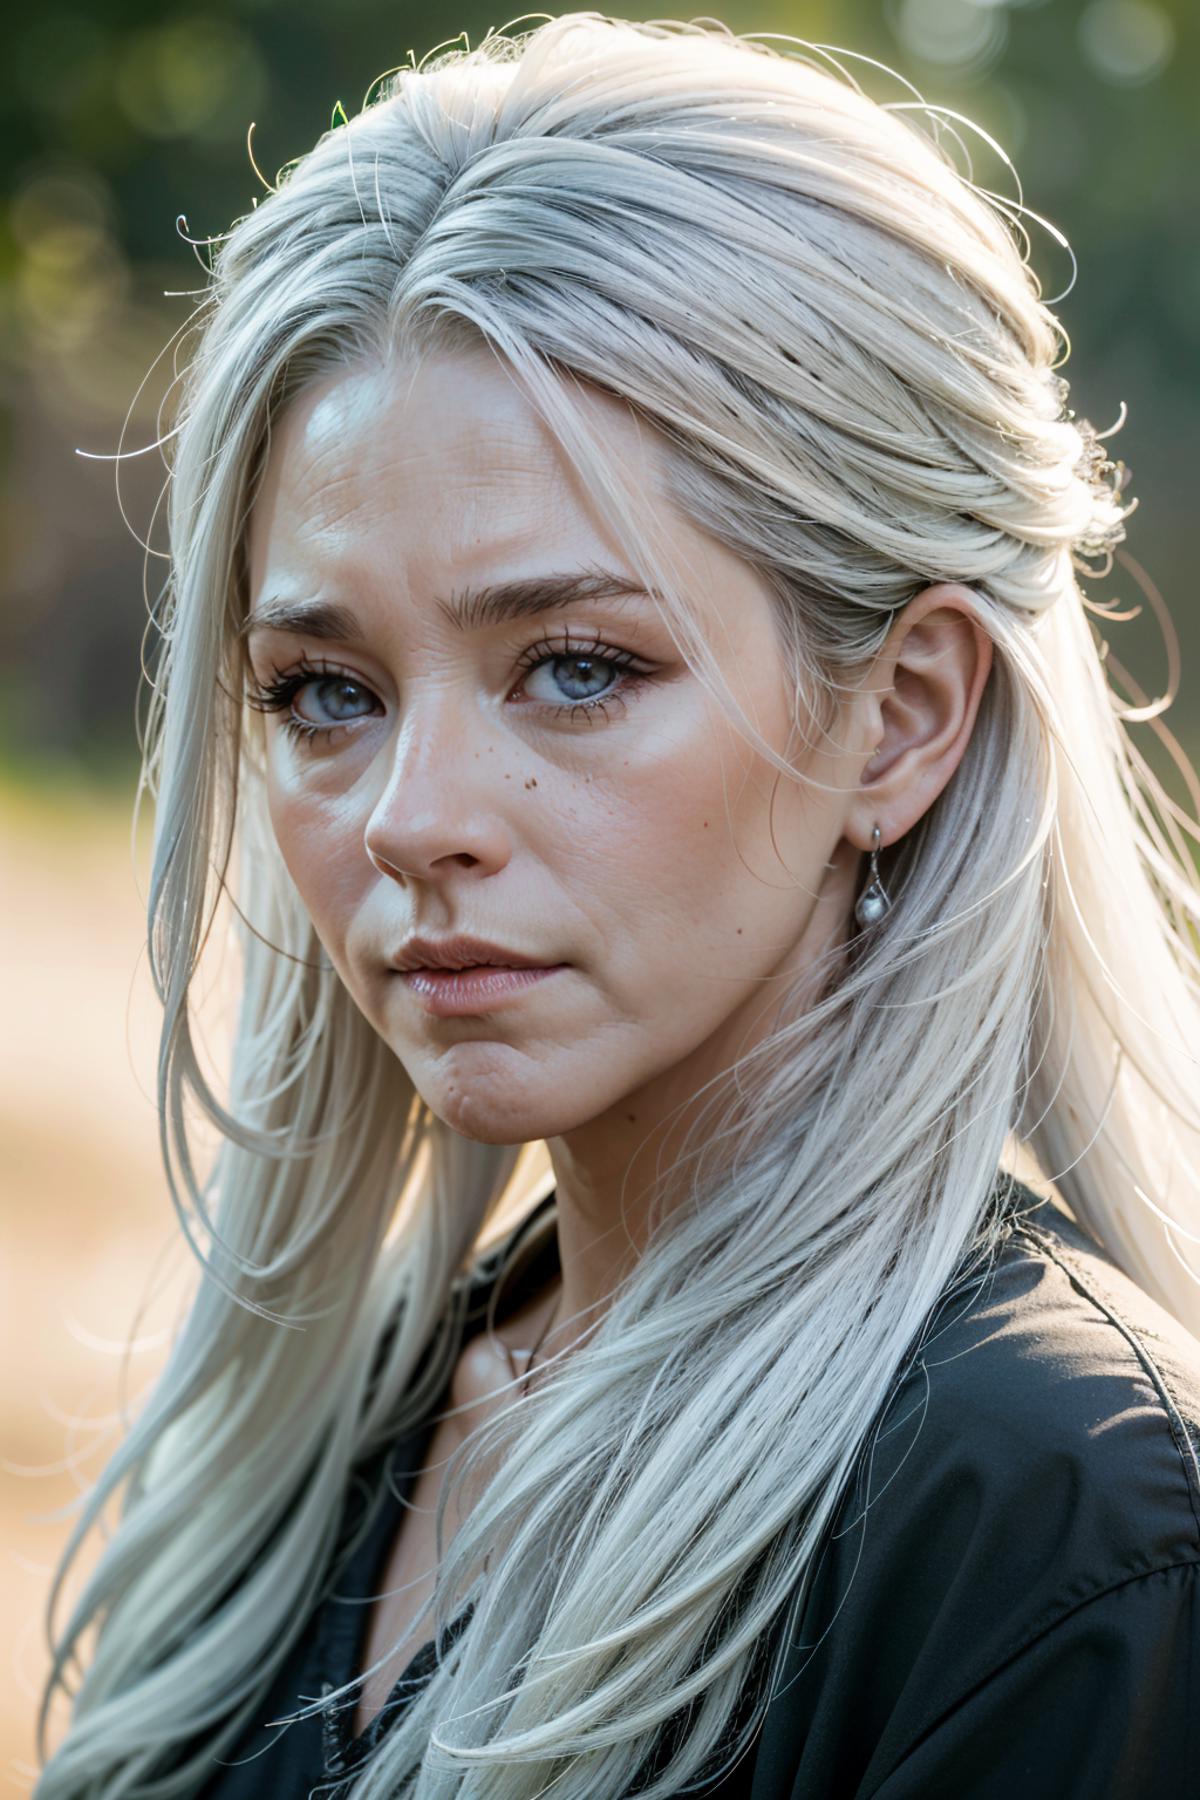 Carol from The Walking Dead image by BloodRedKittie